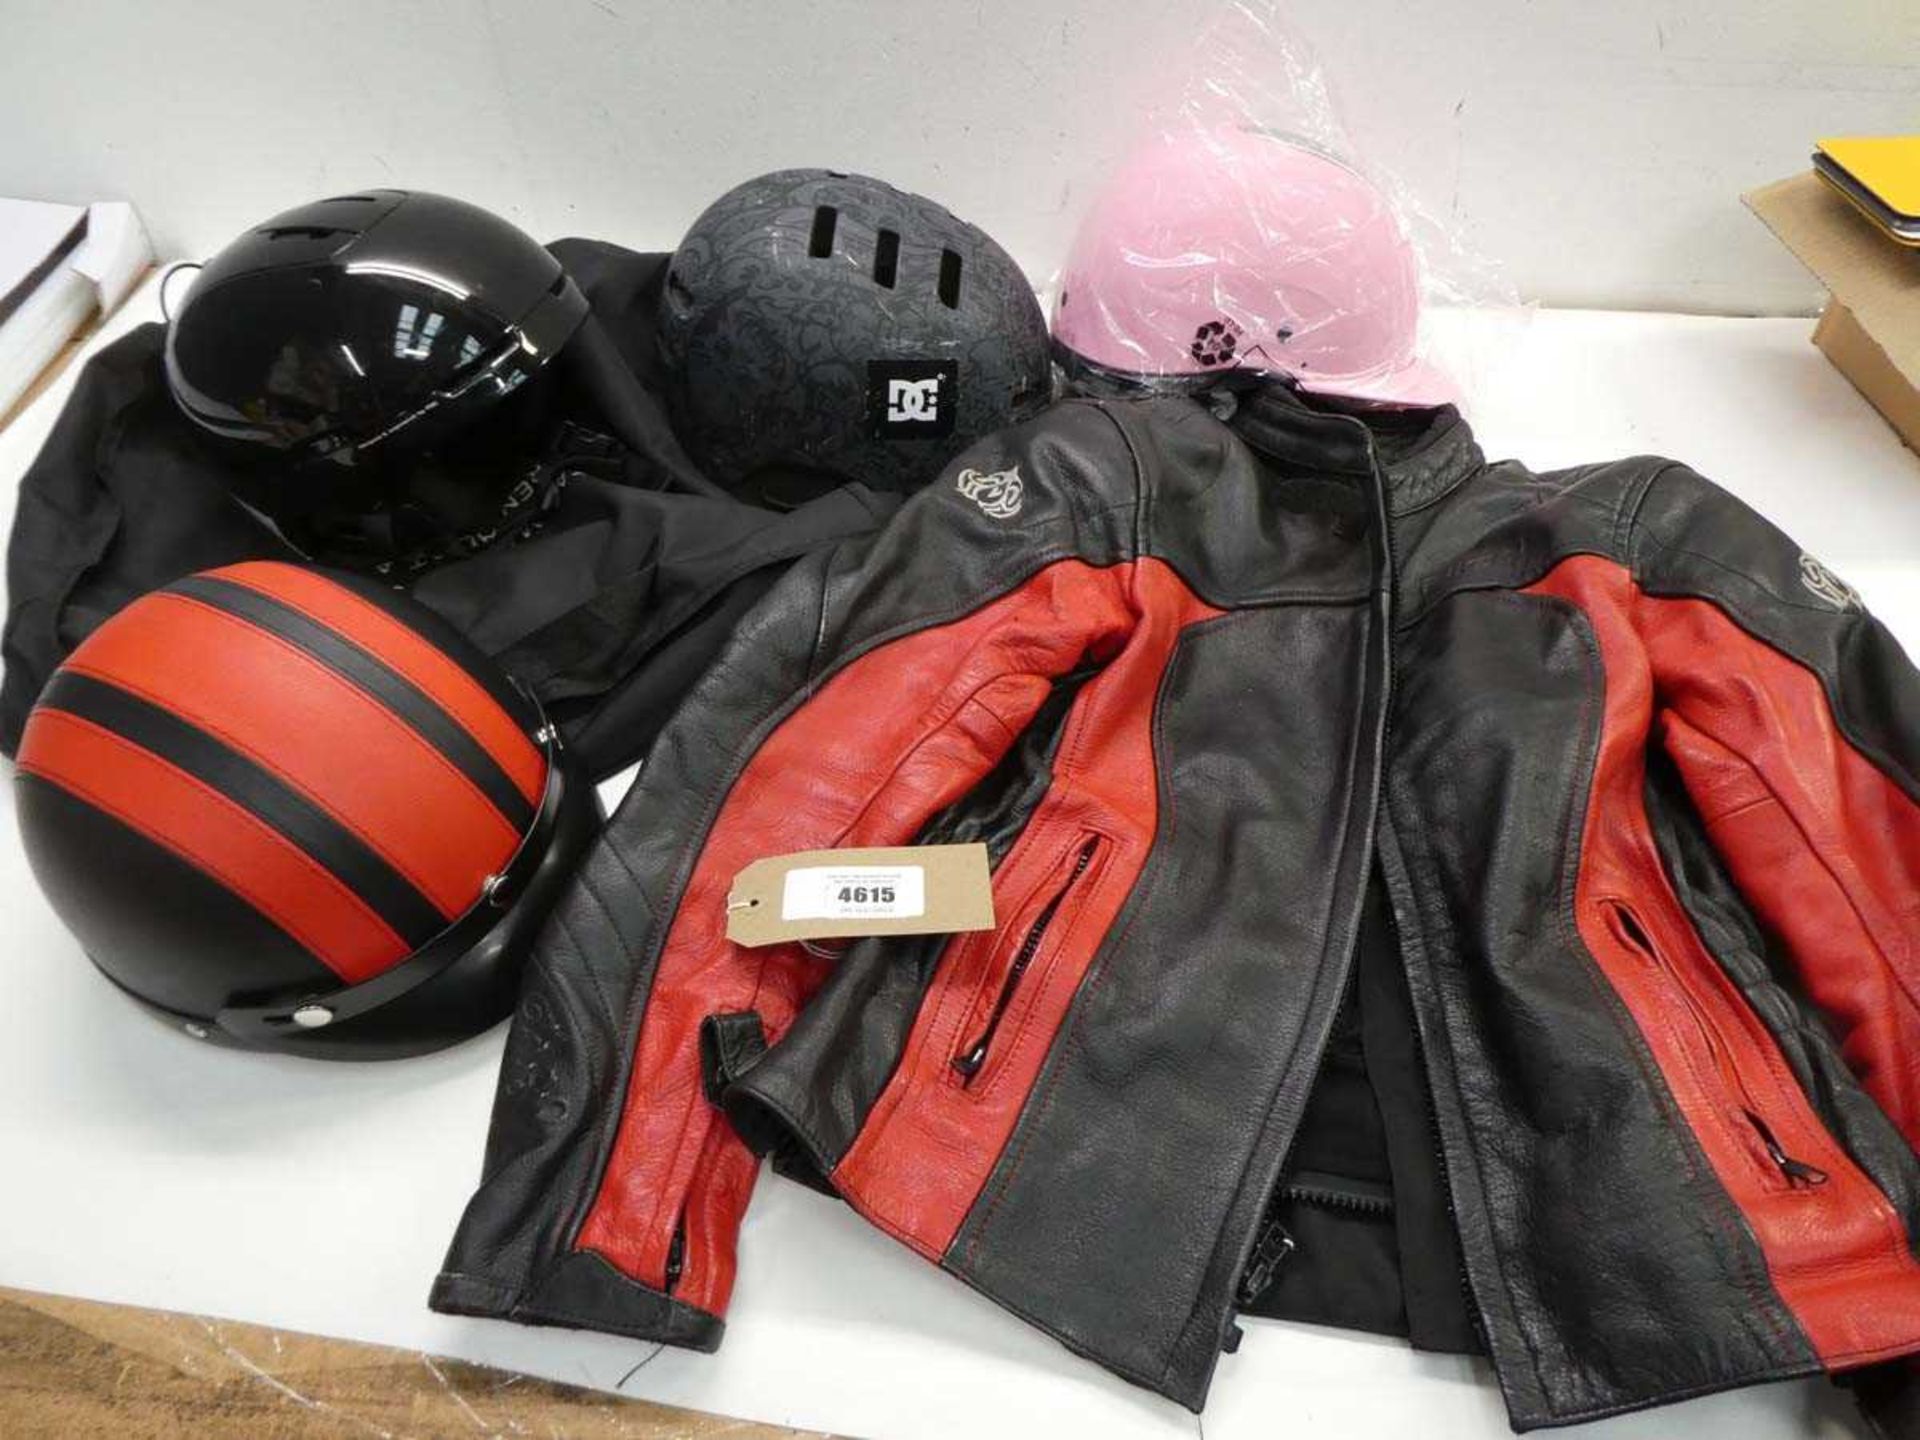 +VAT 3 cycle helmets, motorcycle helmet and motorcycle ladies leather jacket Size 14 (used)